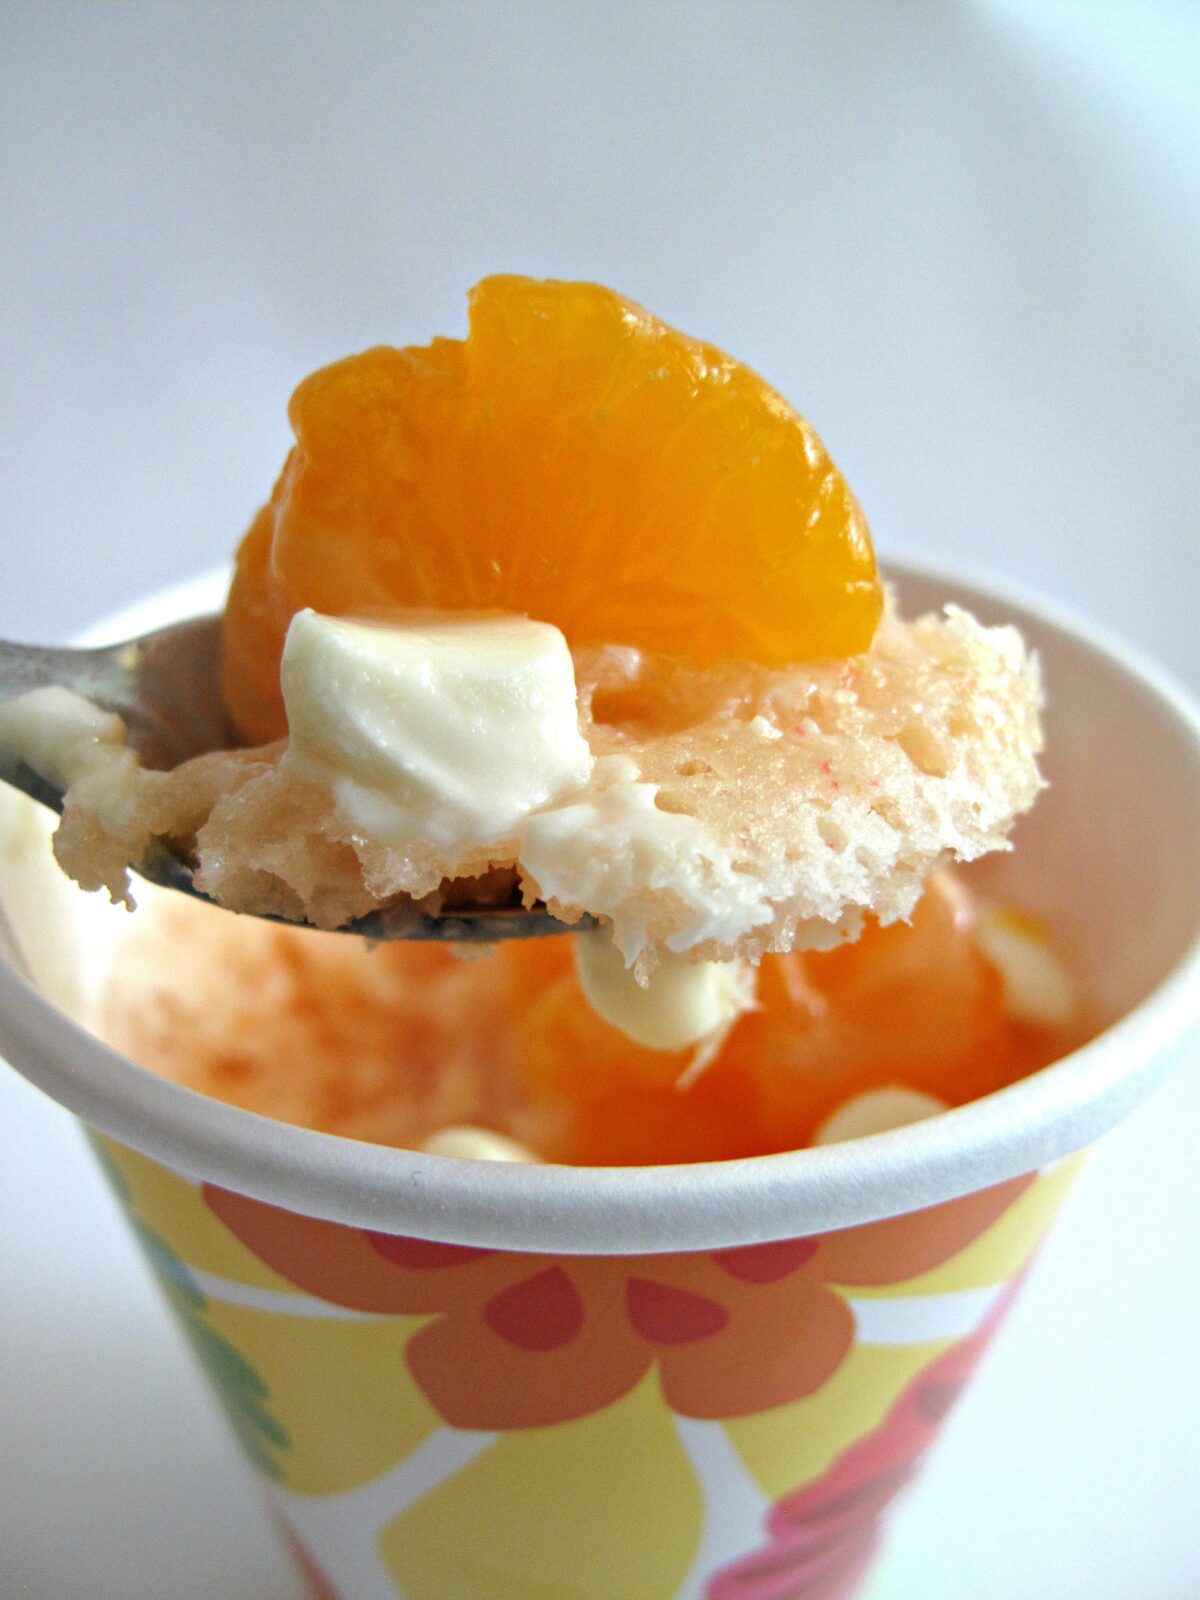 Closeup of spoonful of mug cake with an orange segment.